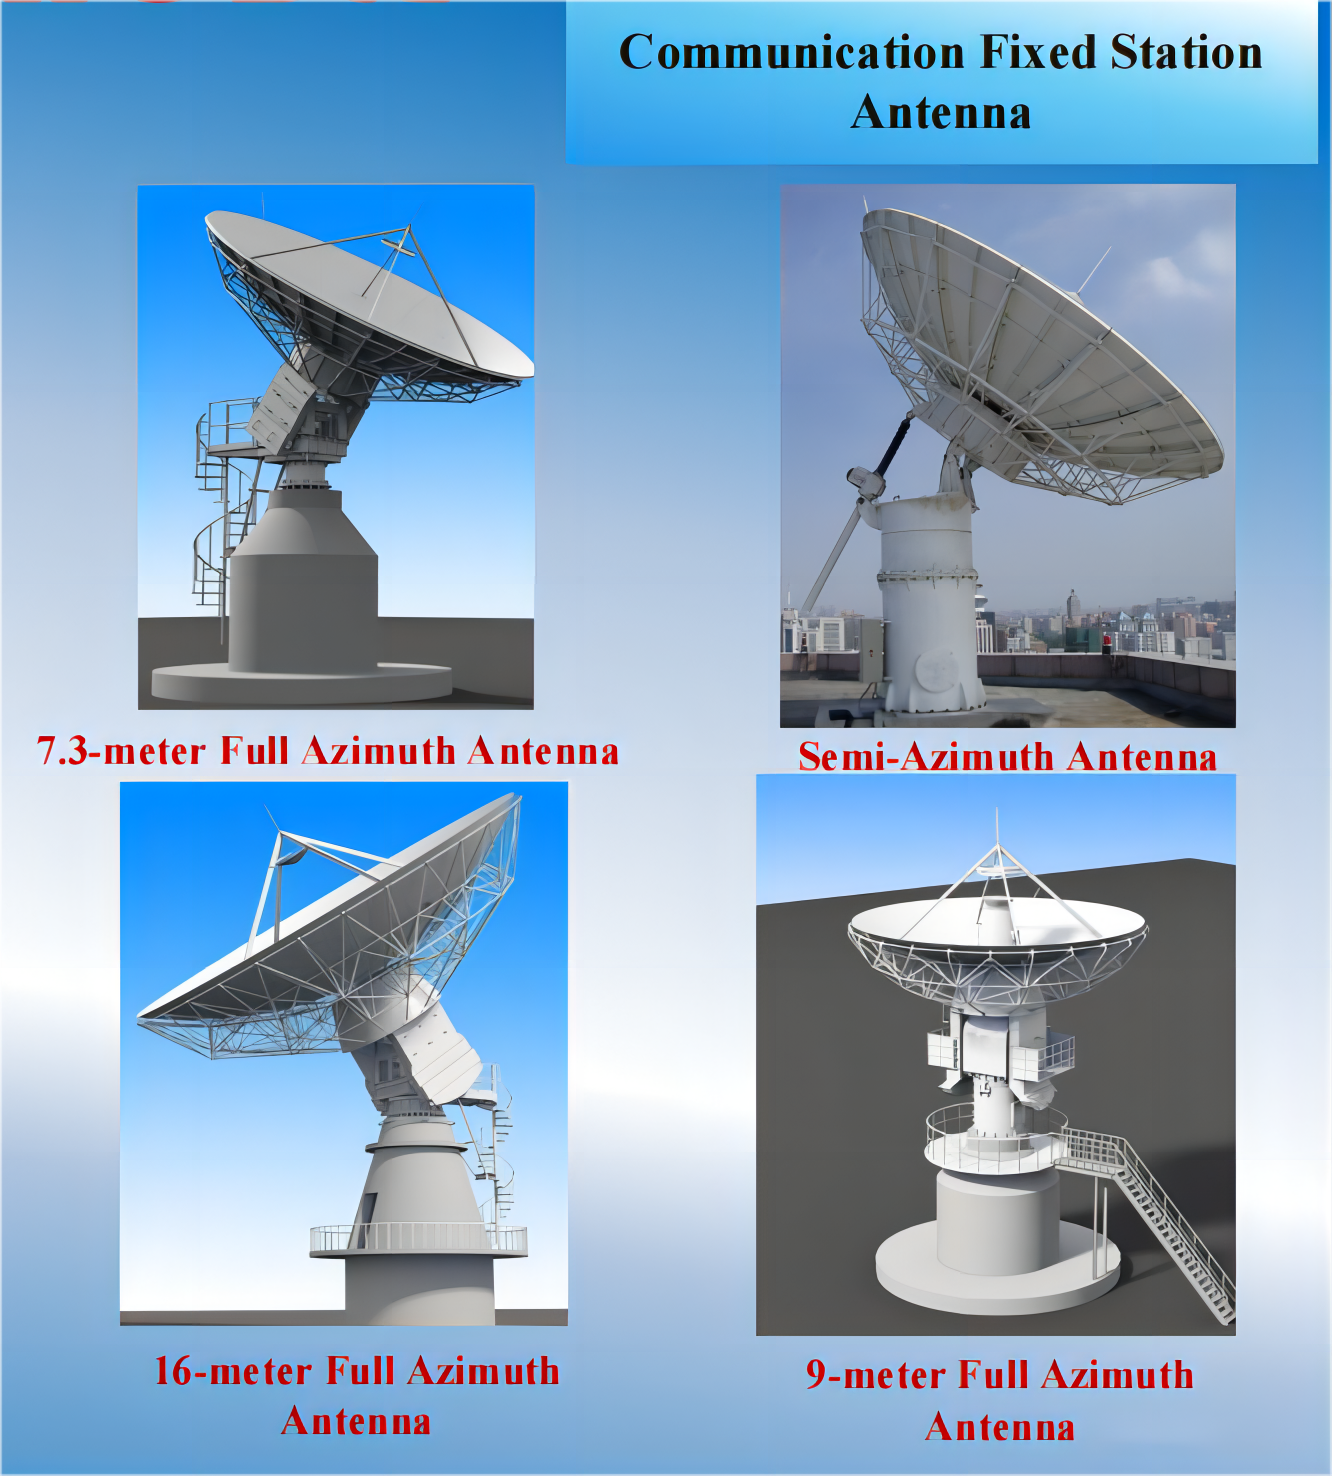 SMARTNOBLE's Communication Fixed Station Antenna